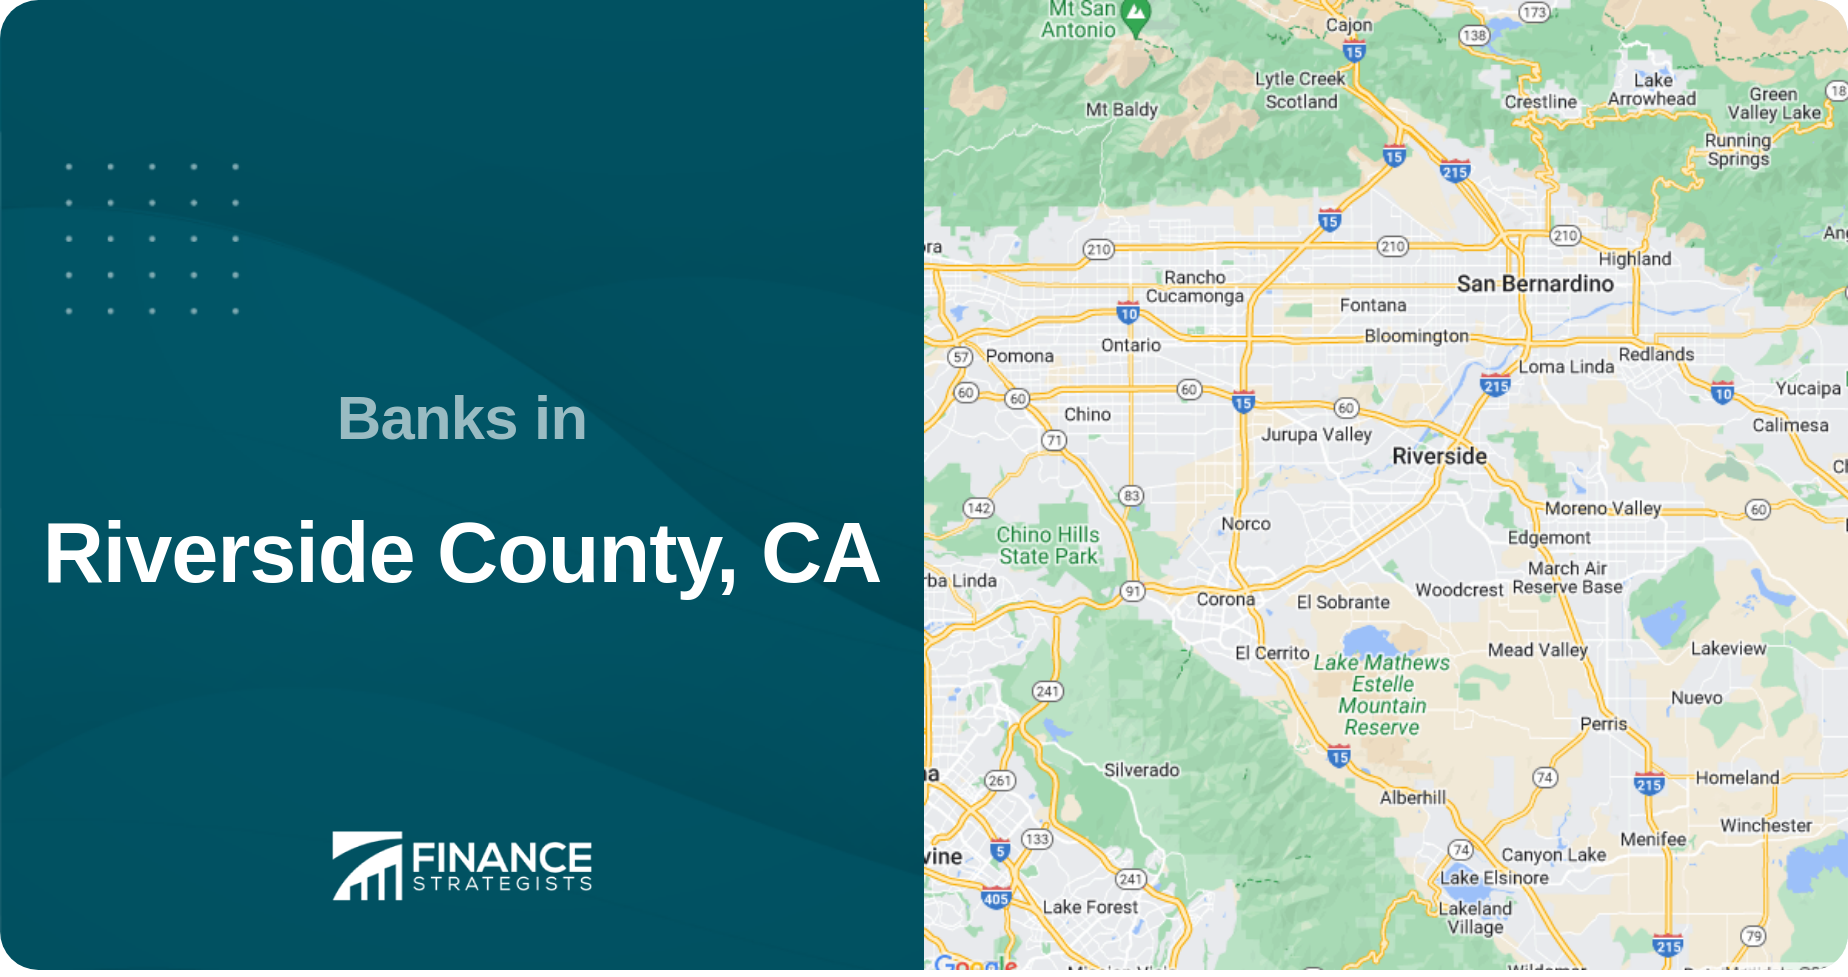 Banks in Riverside County, CA